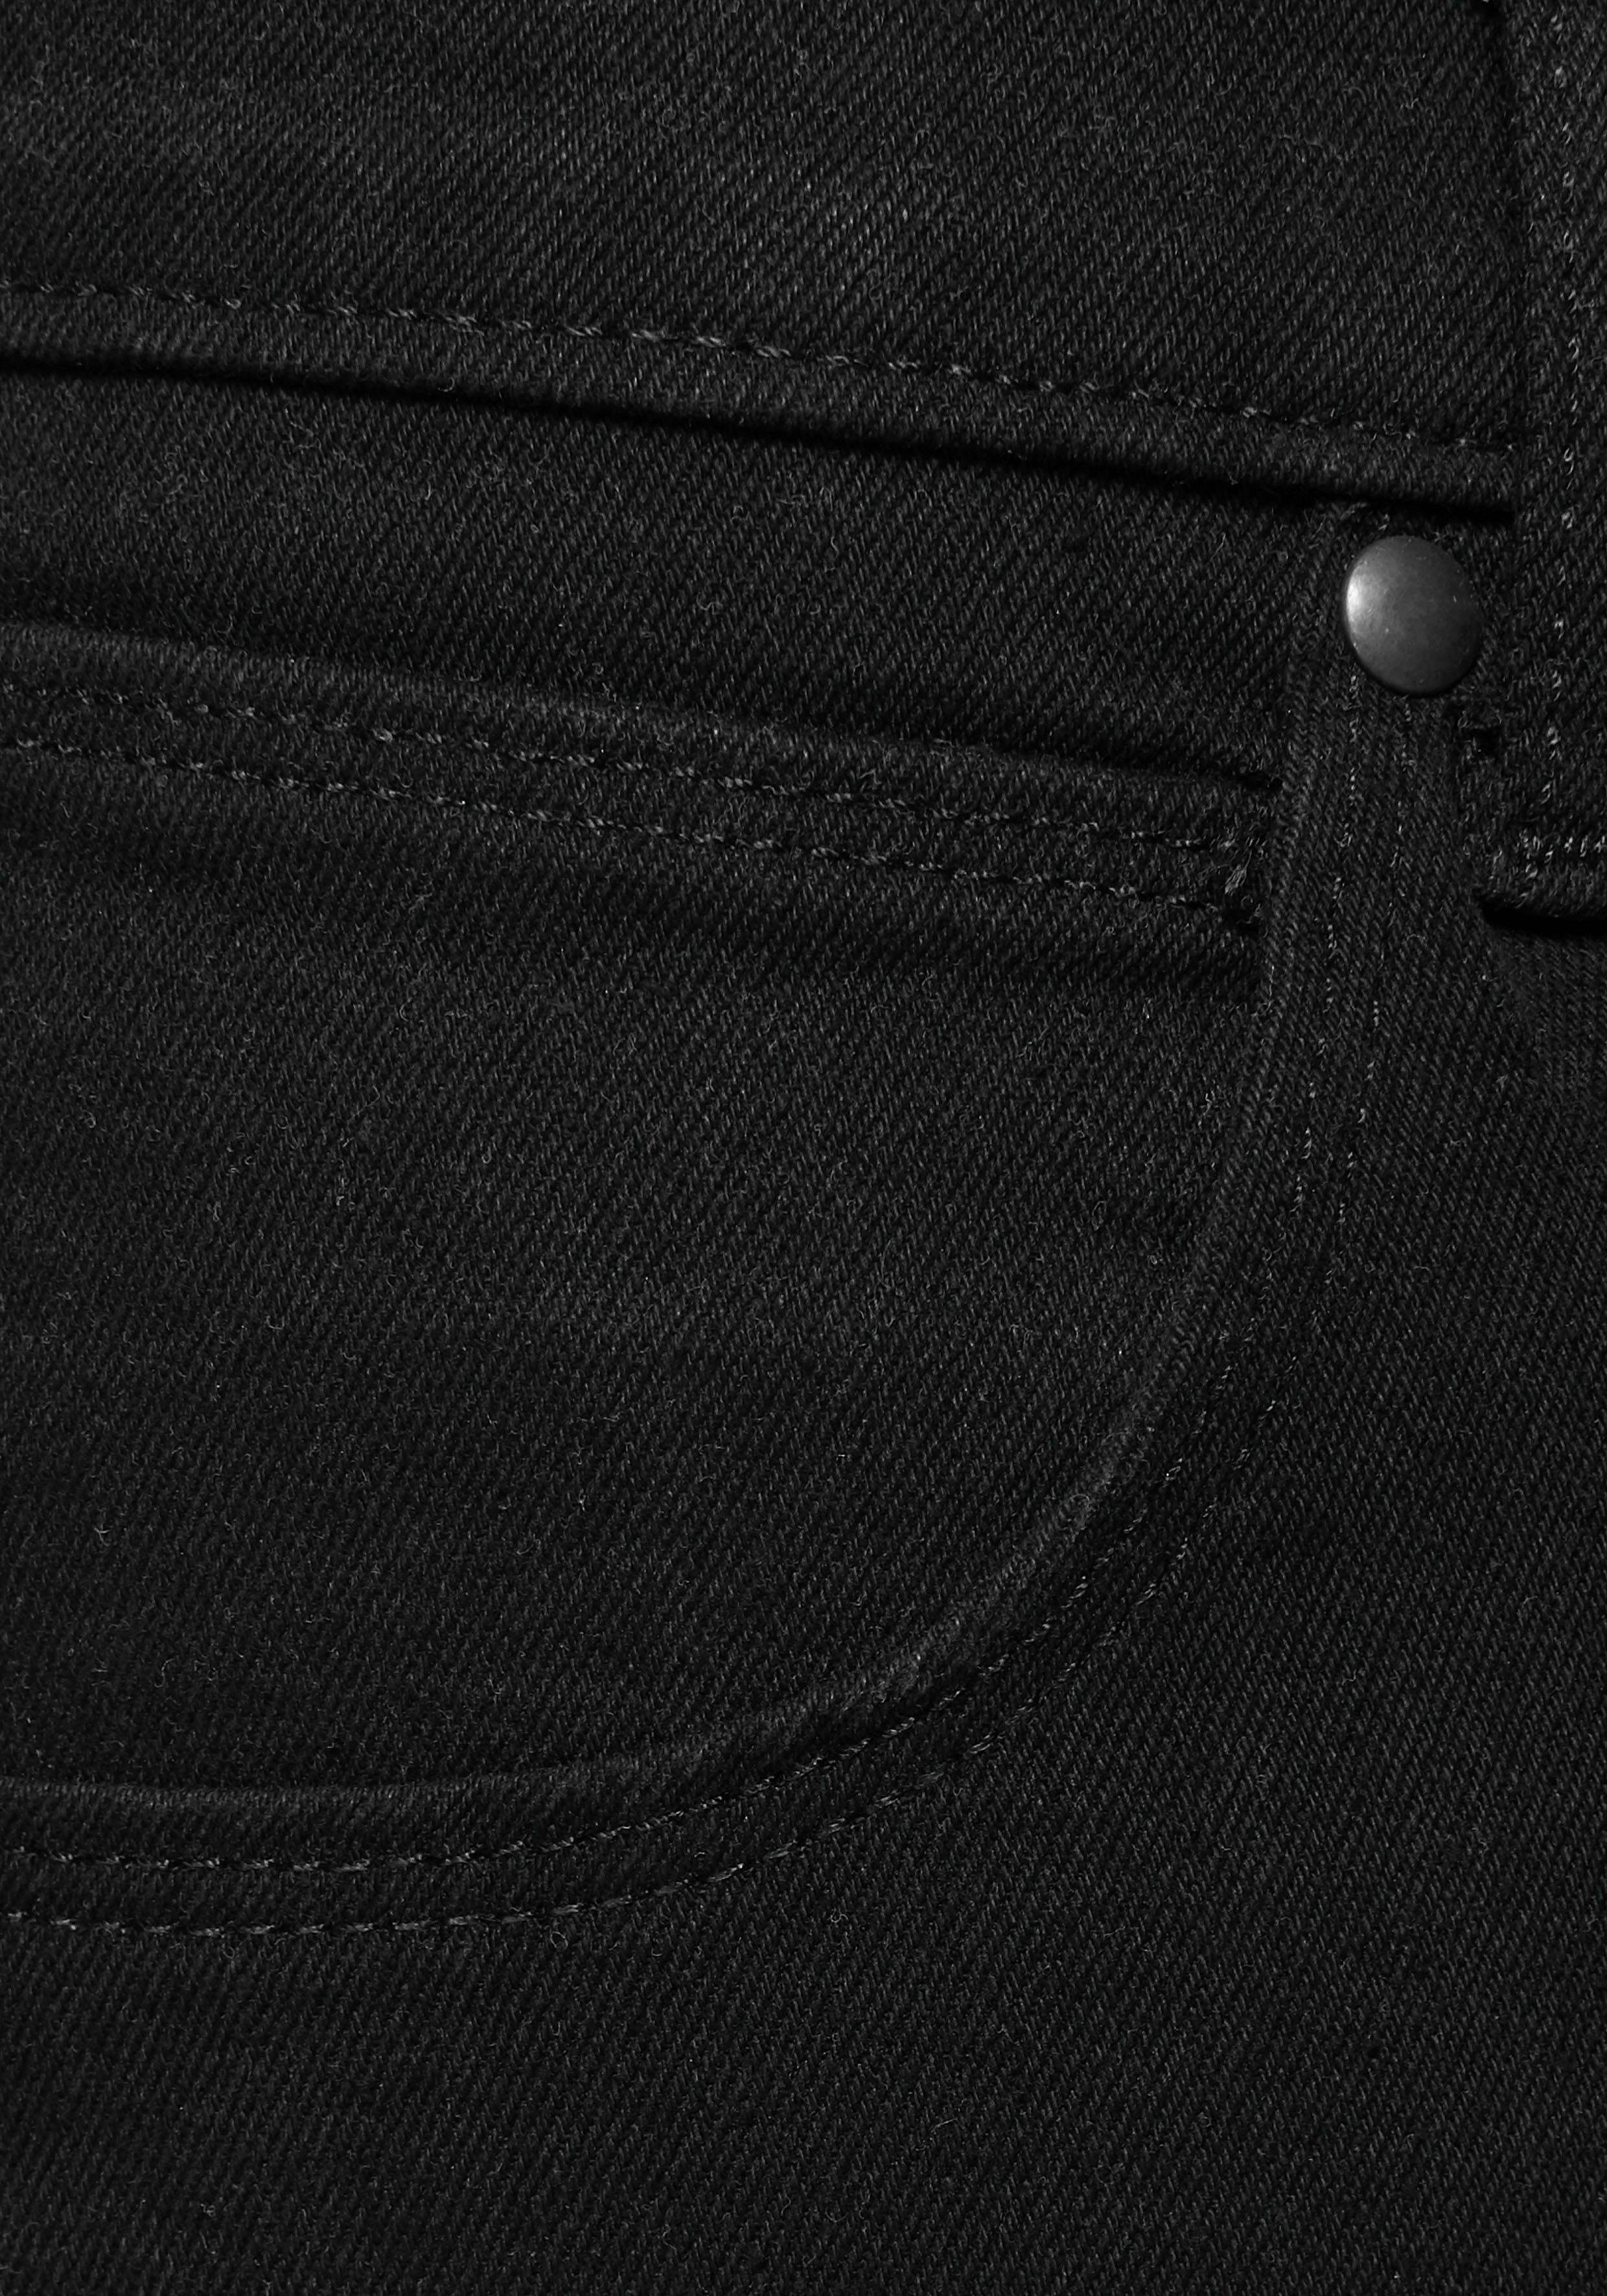 Regular Straight black Regular Greensboro valley Straight Stretch-Jeans Wrangler